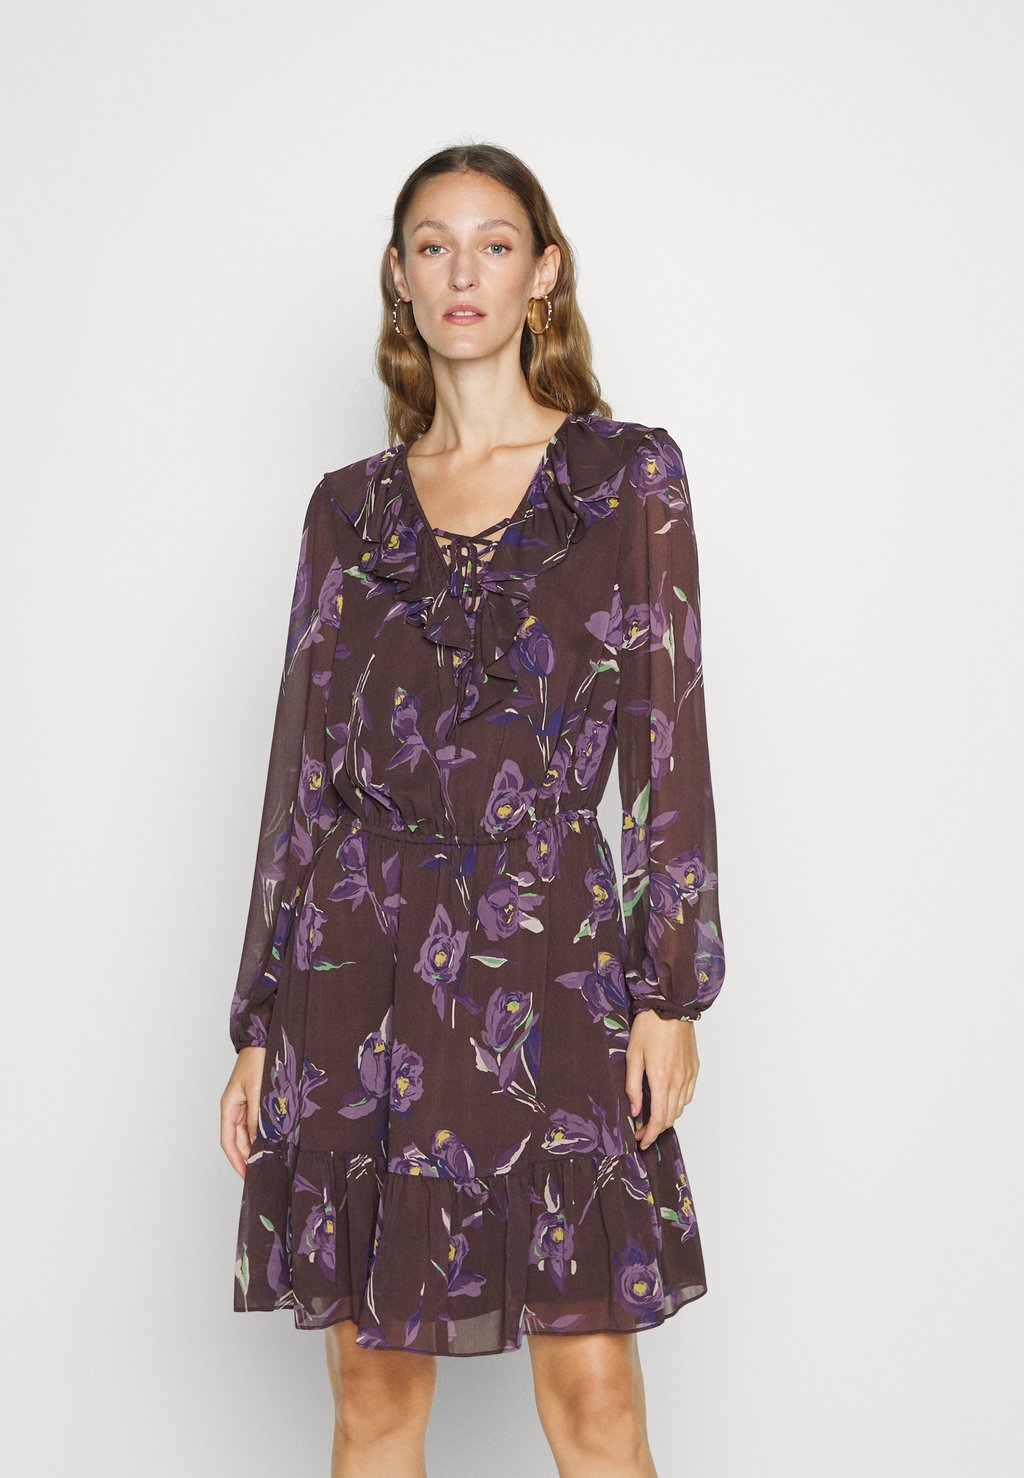 Летнее платье Hilbera Long Sleeve Day Dress Lauren Ralph Lauren, цвет brown/purple/multi-coloured босоножки на платформе katelina aldo цвет brown multi coloured